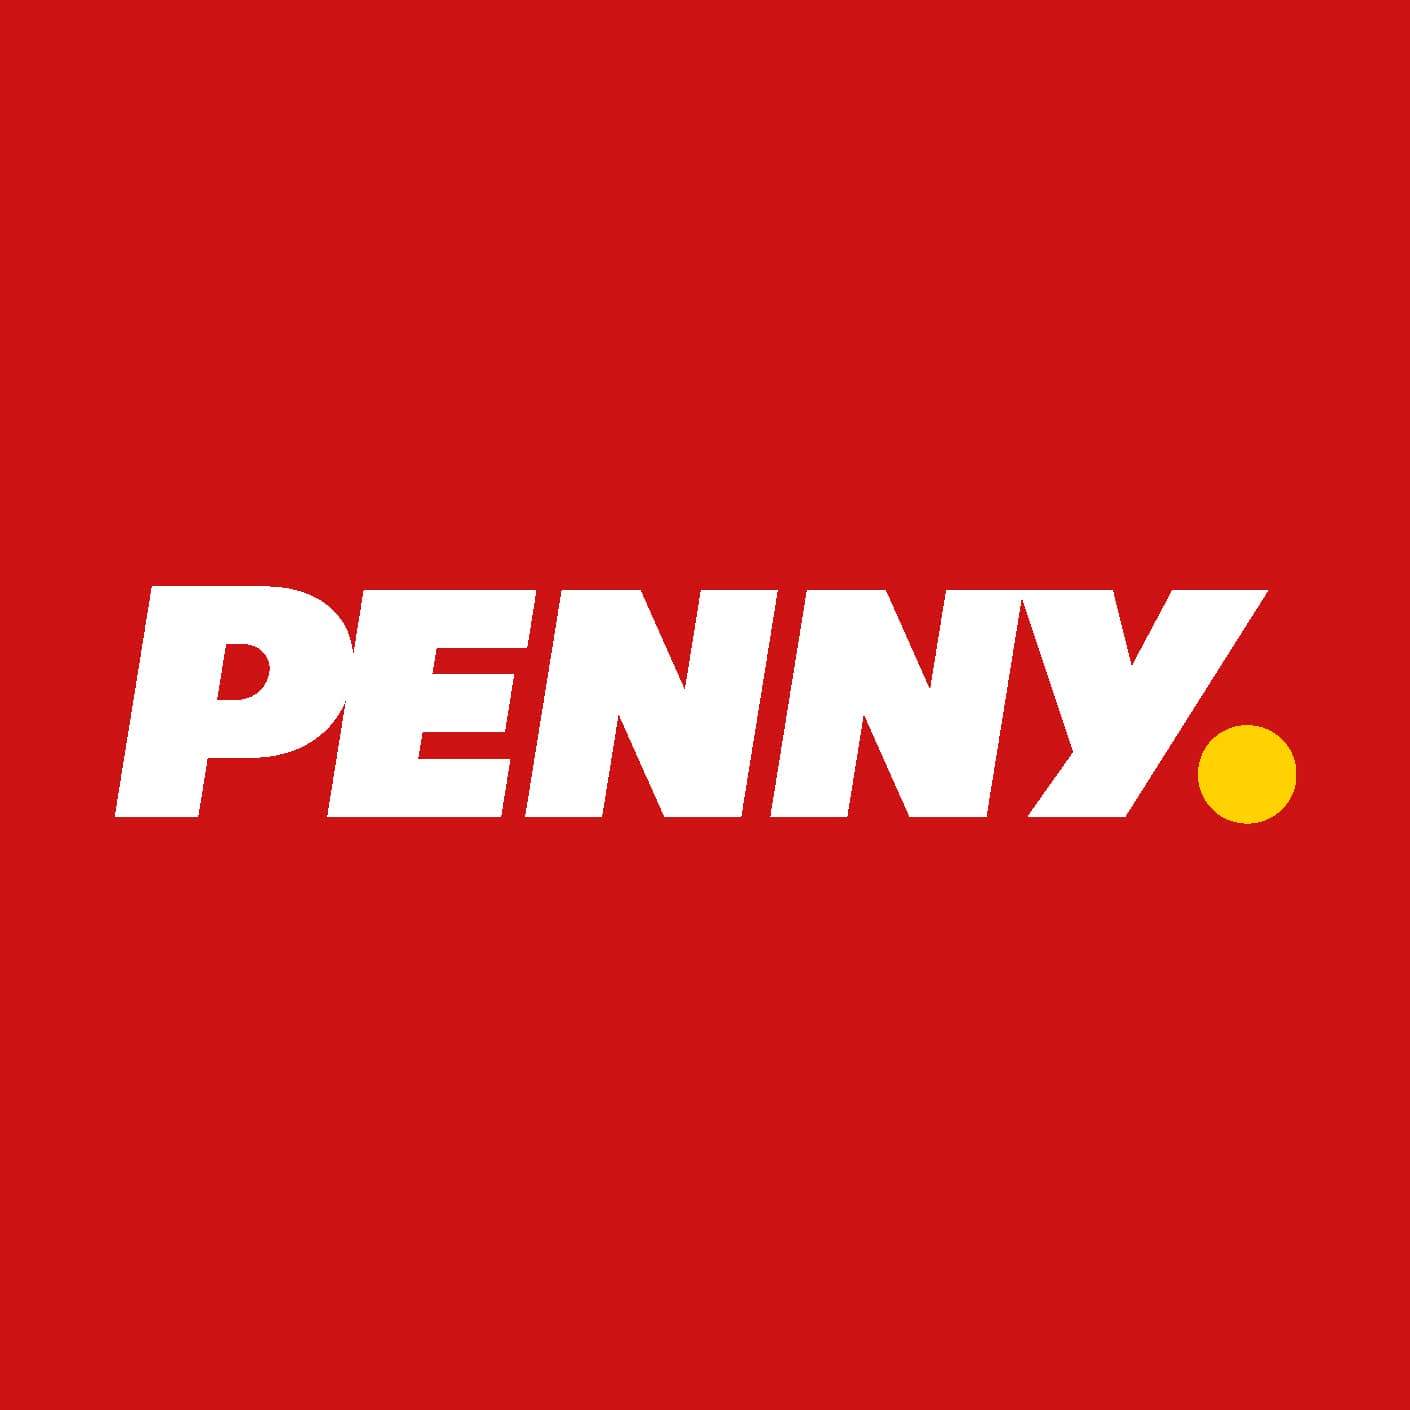 Penny Market esettanulmány